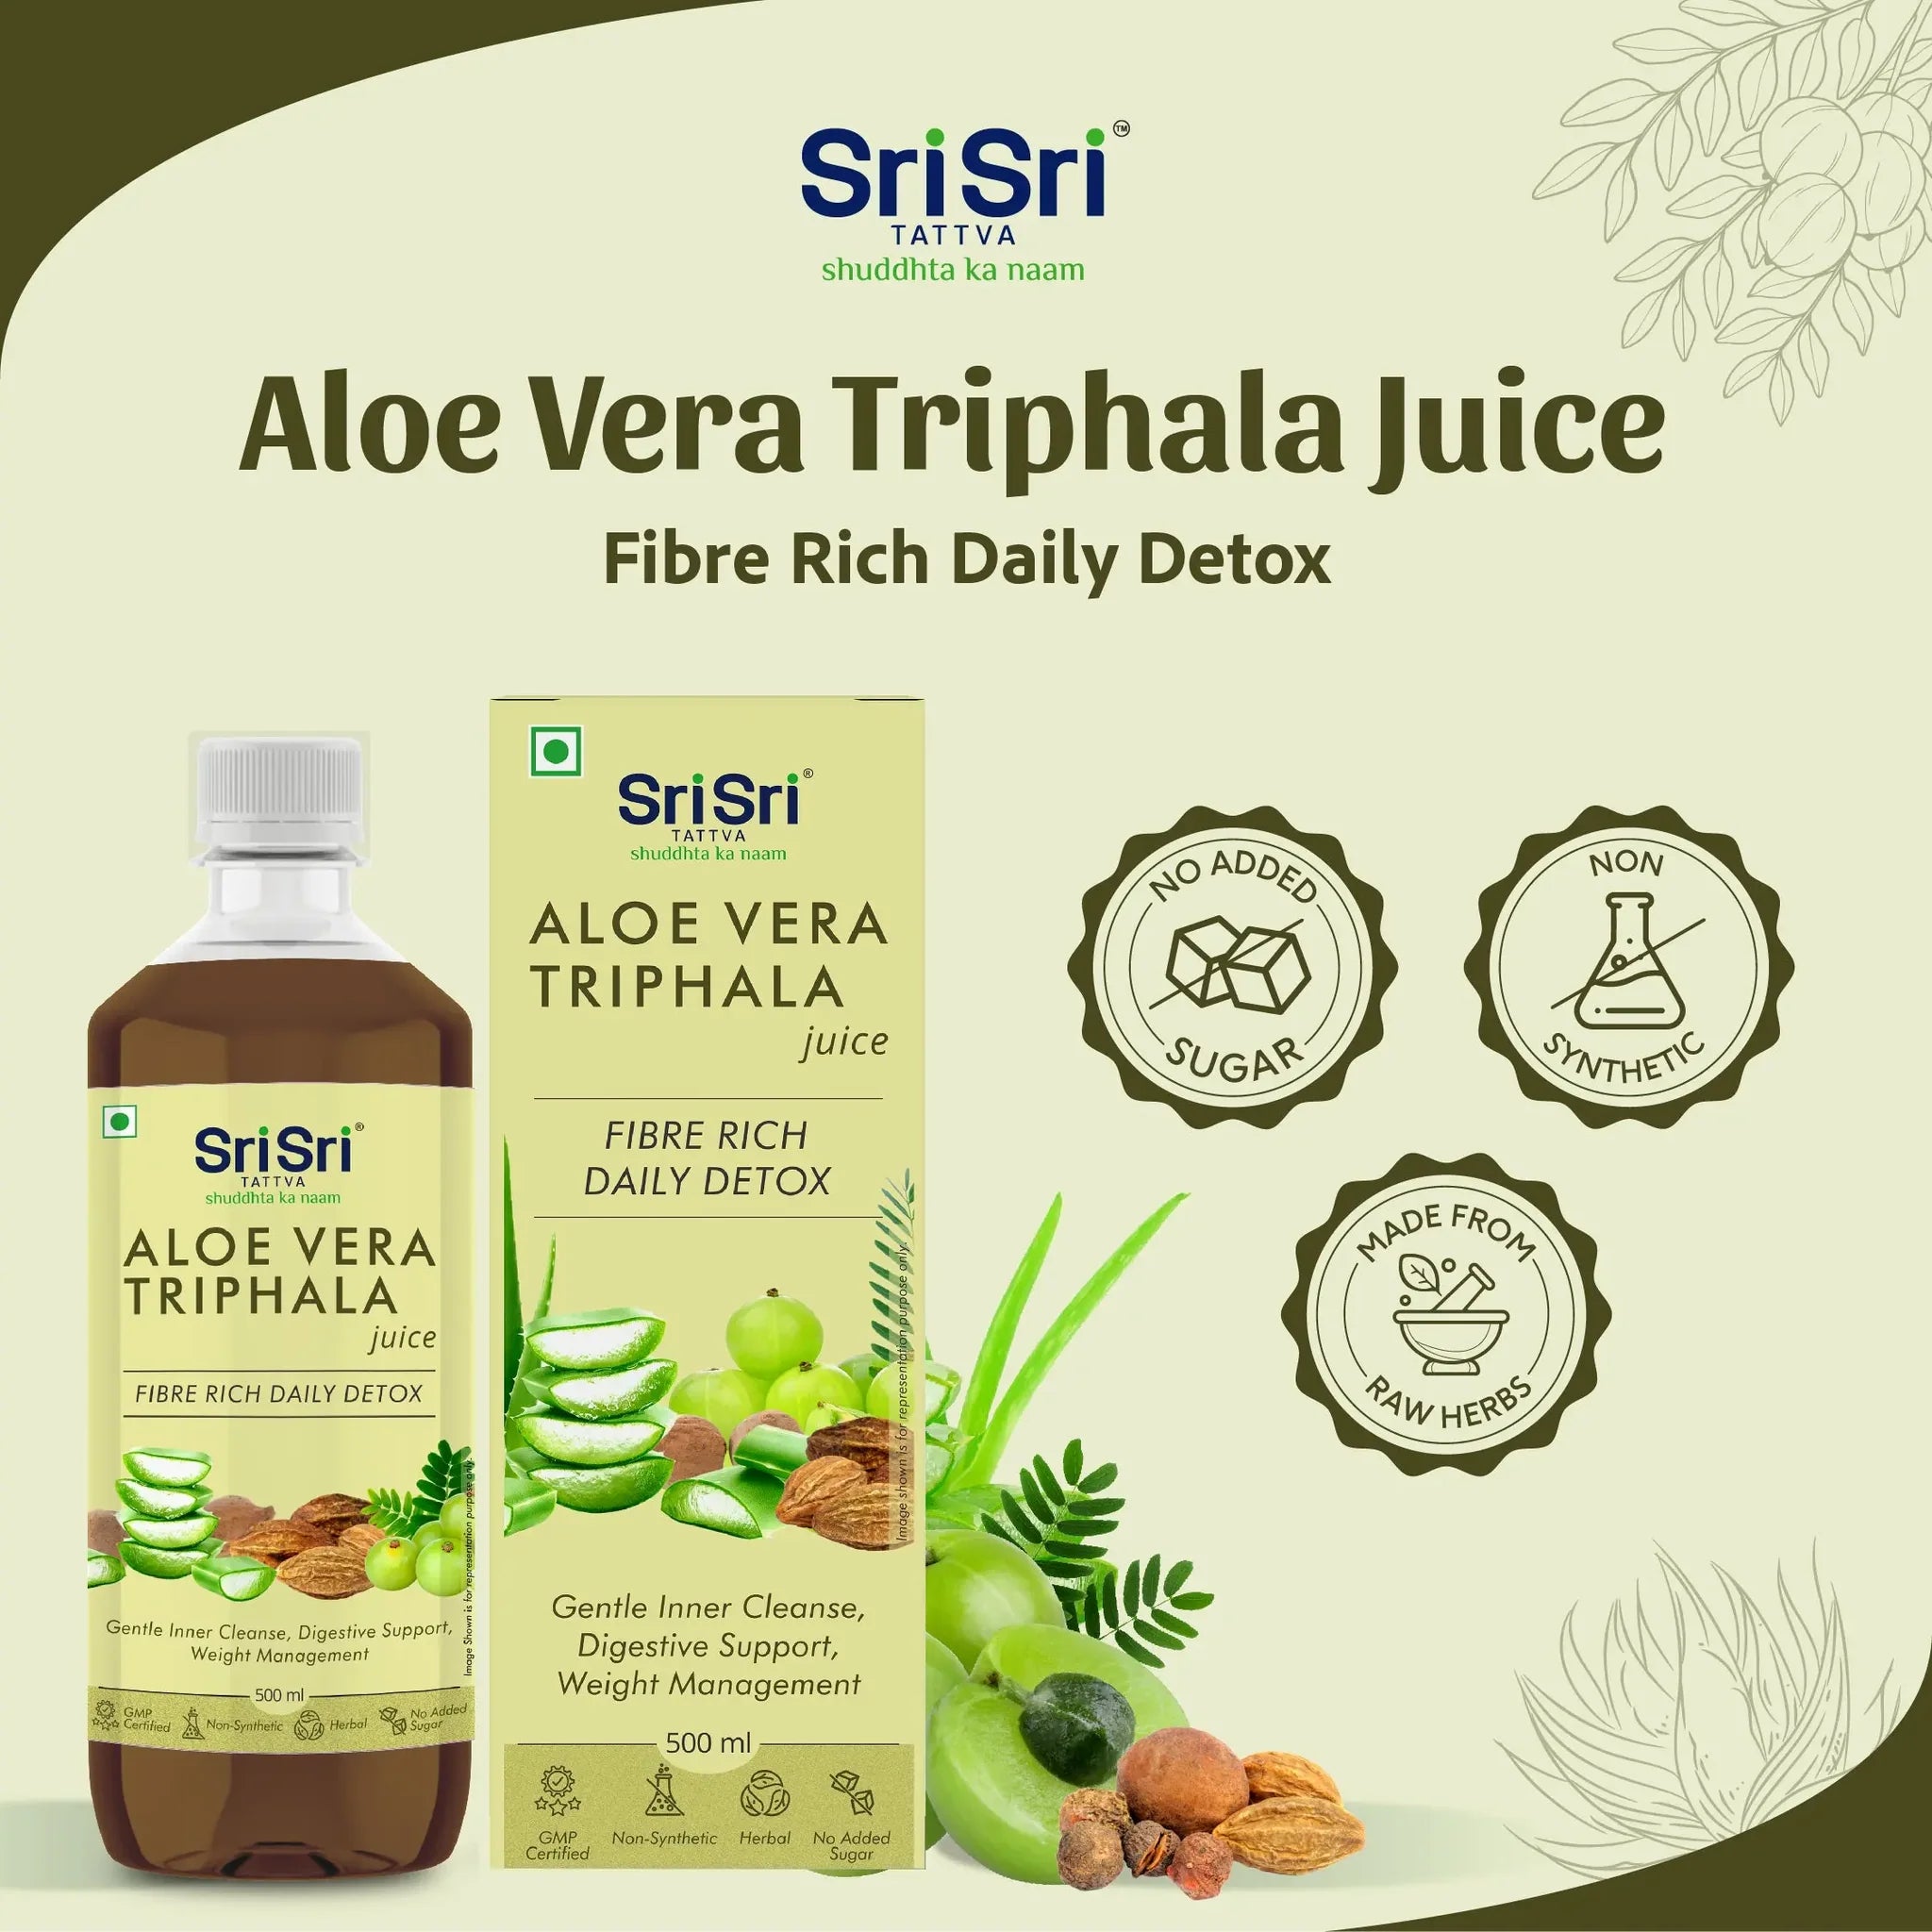 Sri Sri Tattva Aloe Vera Triphala Juice - 500ml - Pack of 2